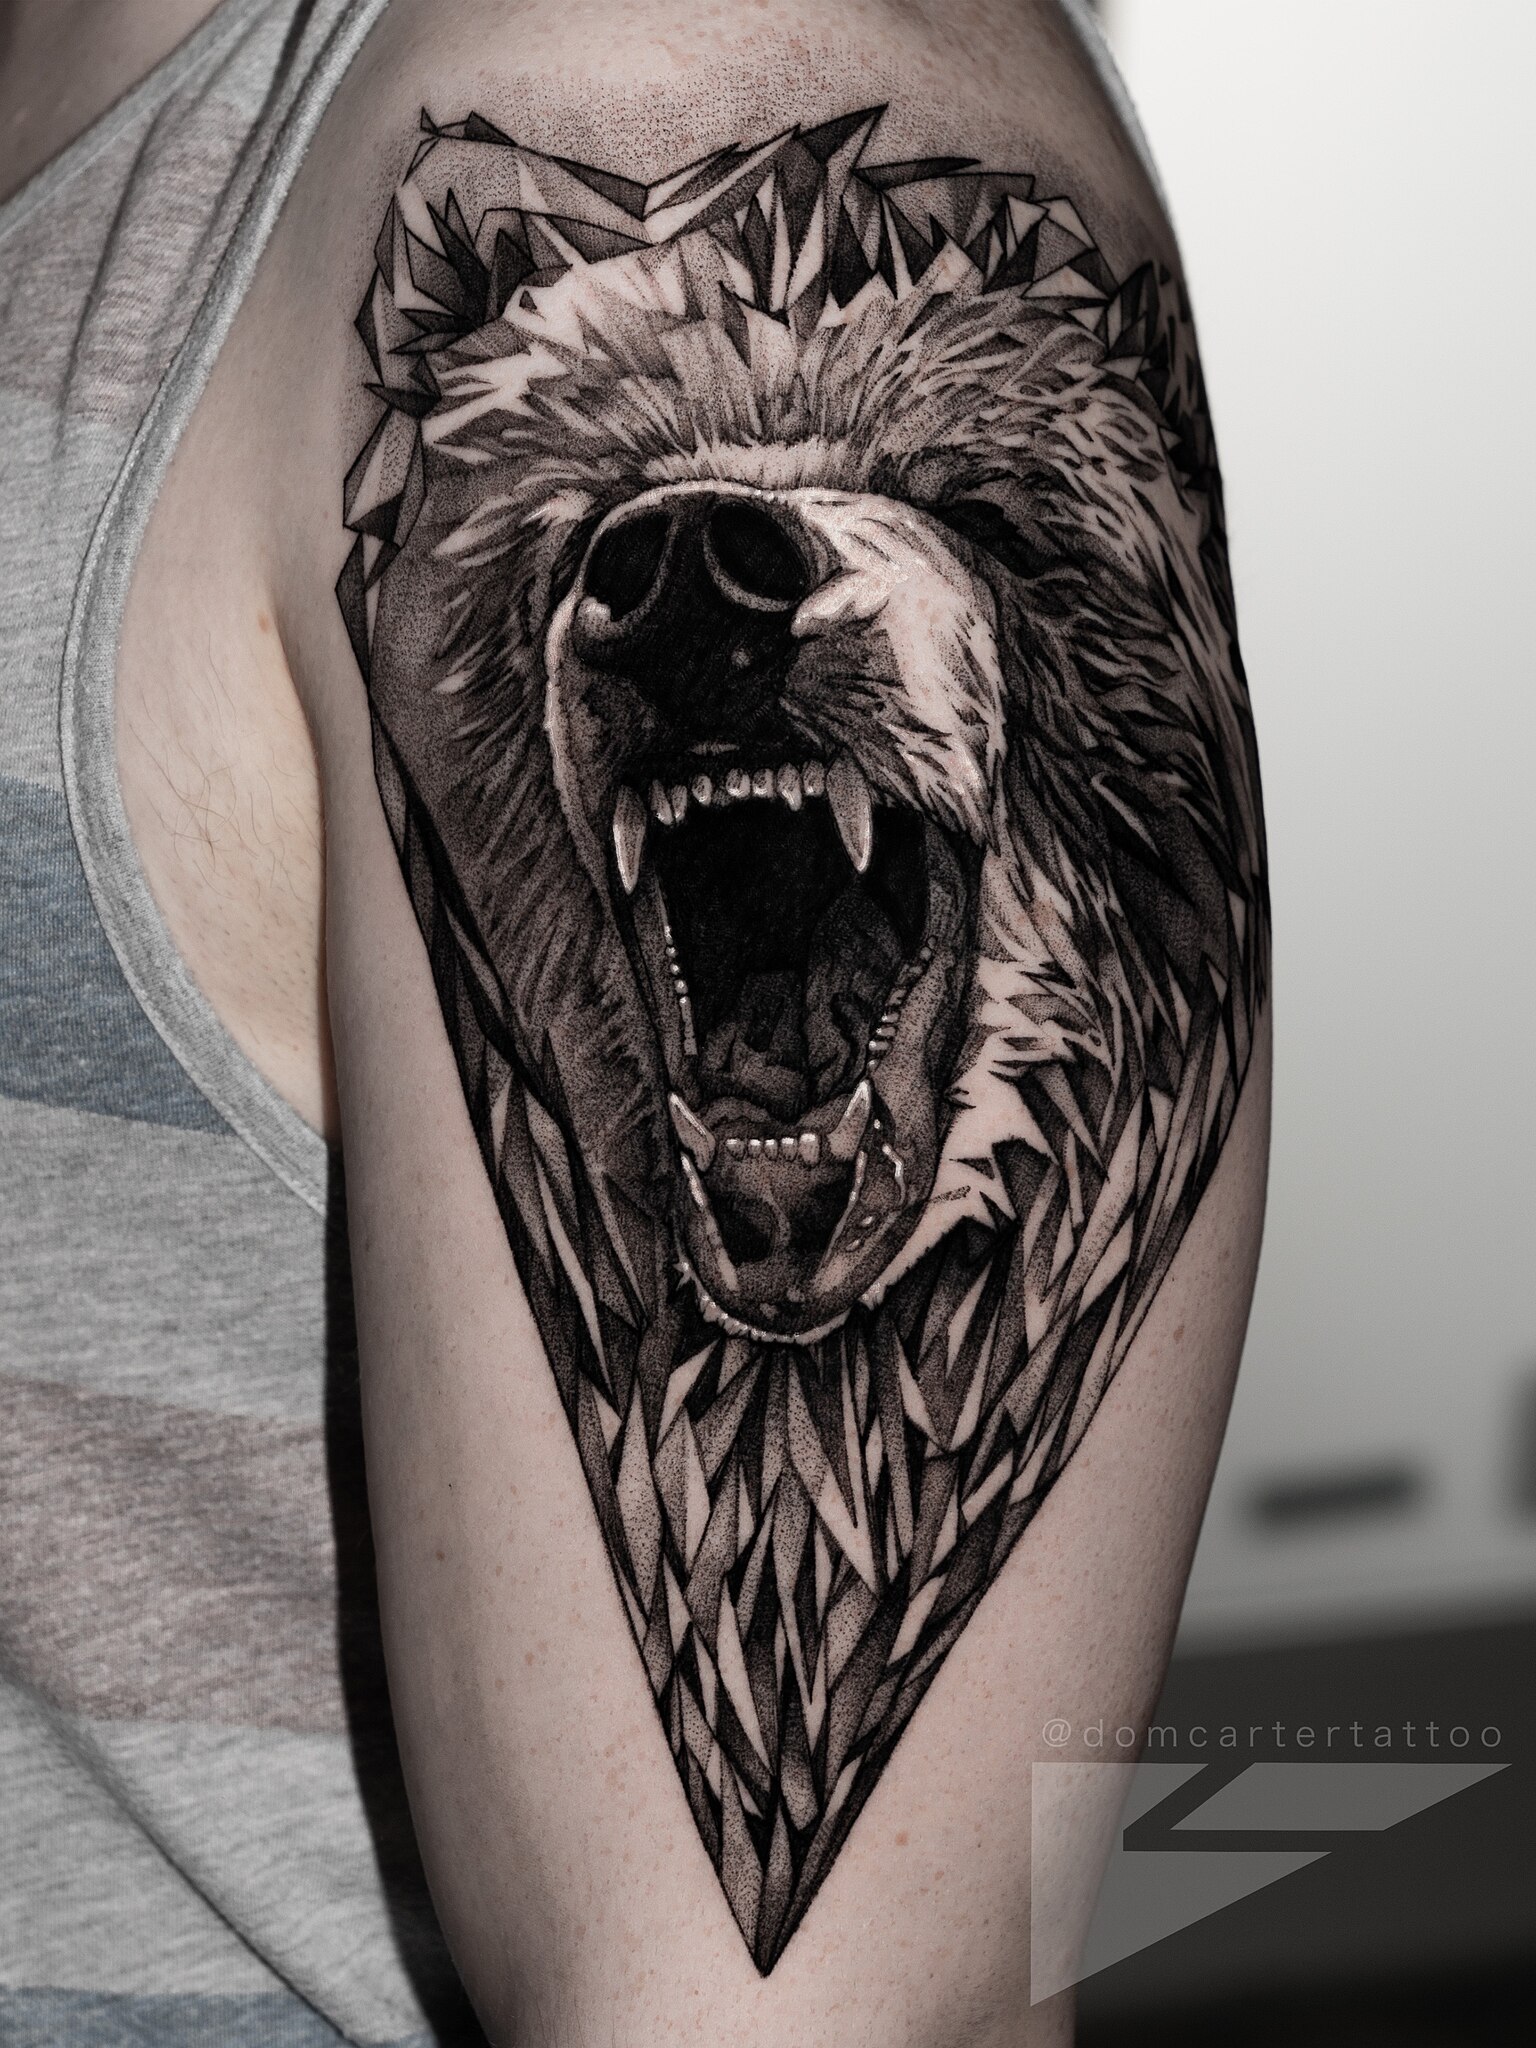 Elbow Bear Tattoo on Arm  Best Tattoo Ideas Gallery